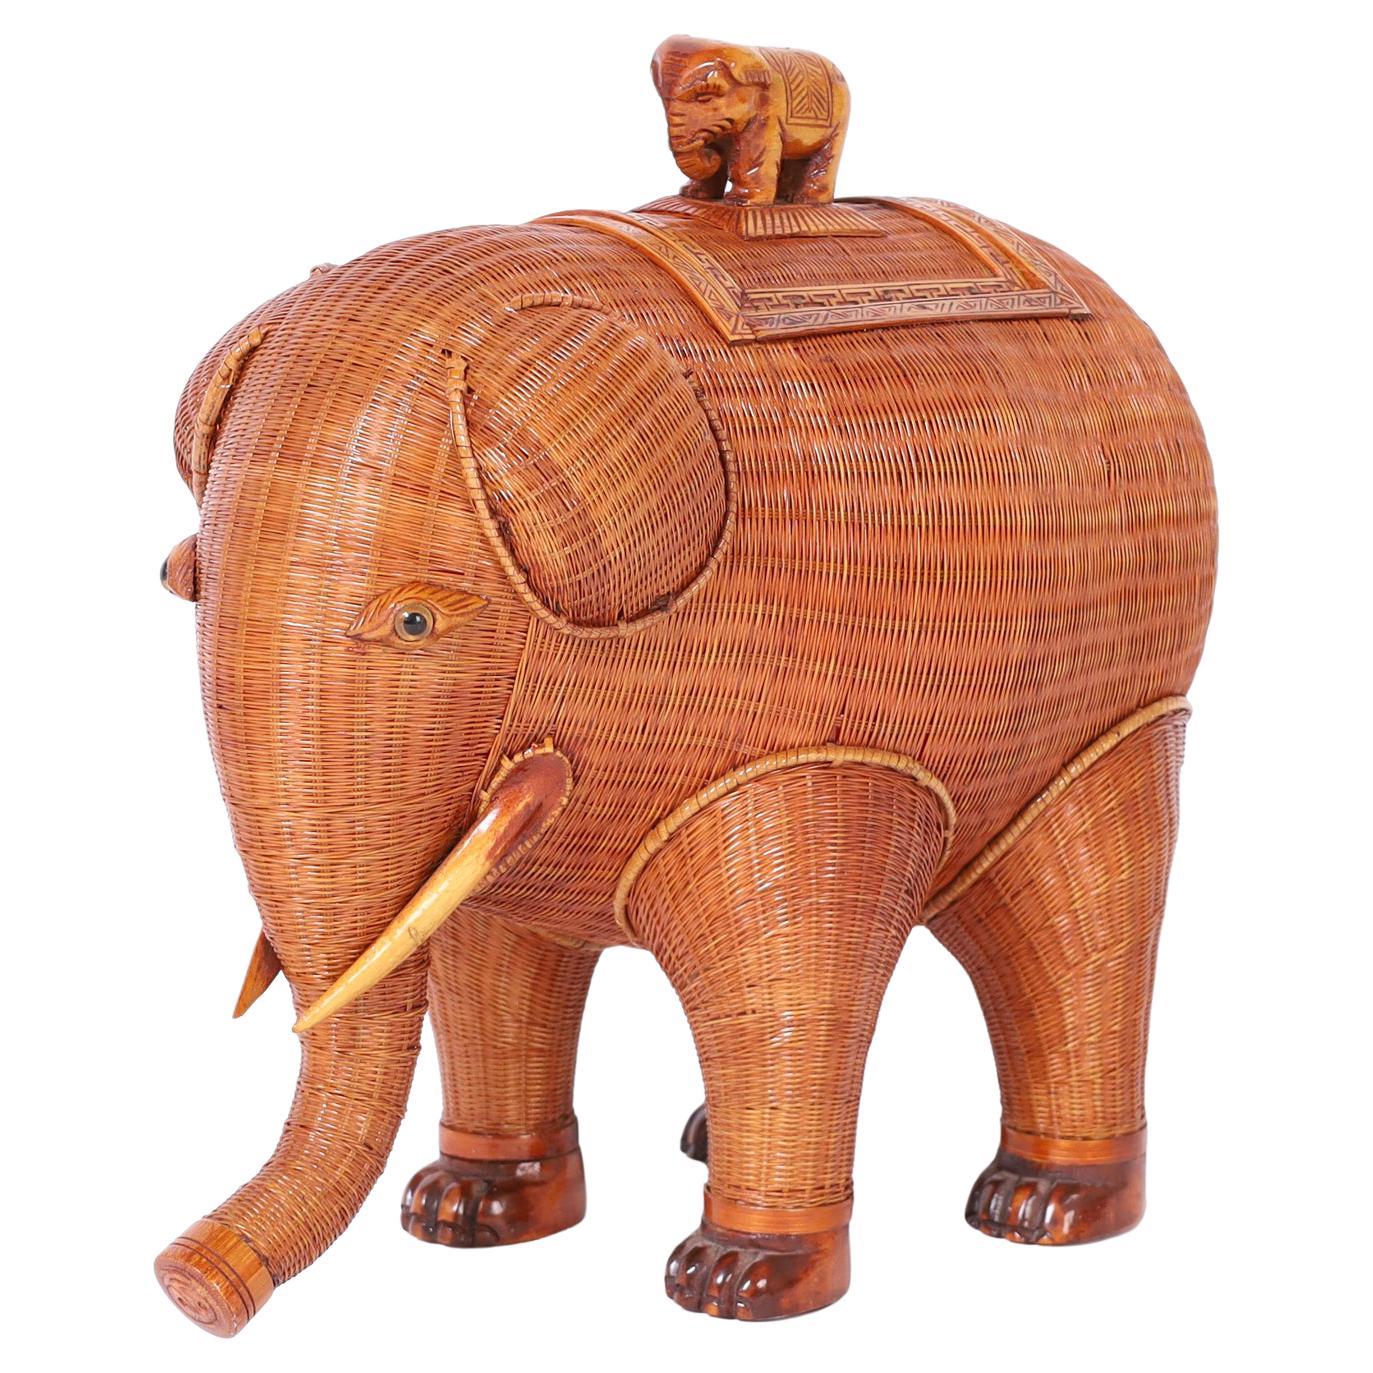 Wicker Elephant Box For Sale